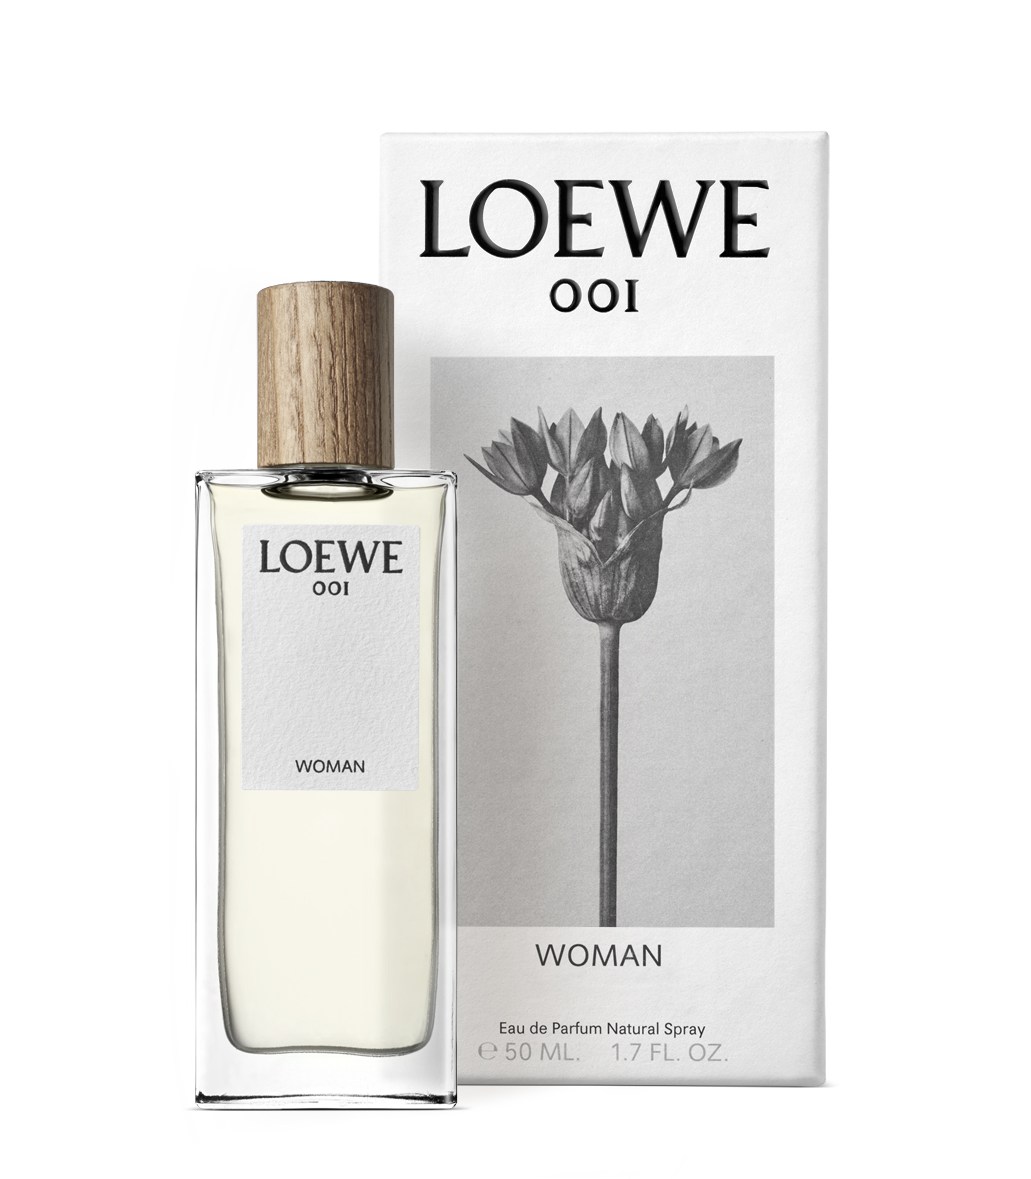 UVE WOMAN 50ML - Loewe’s New 001 Fragrance